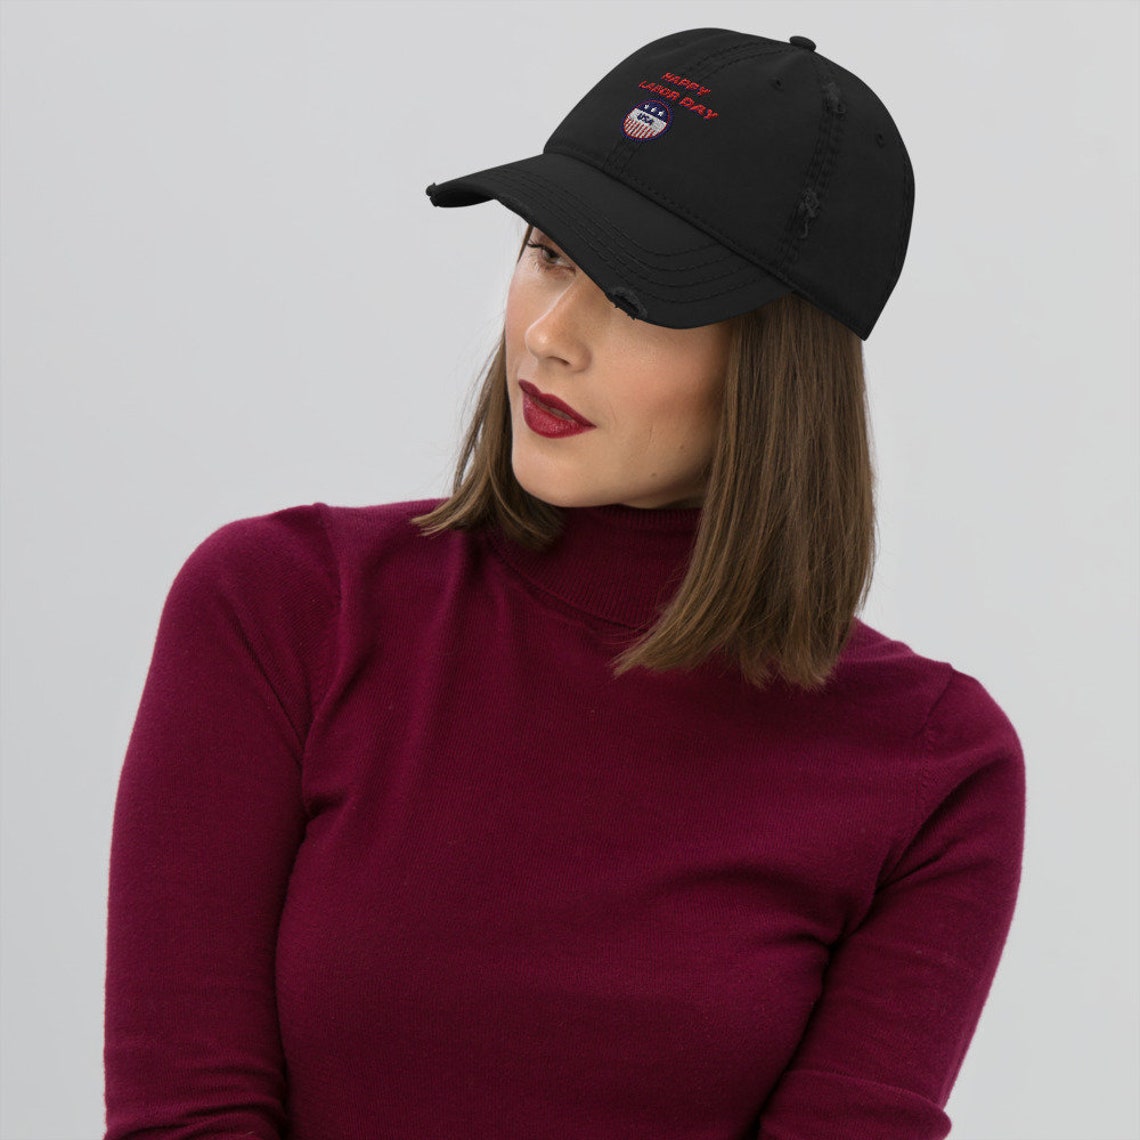 Labor day hat sport cap designer holiday cap baseball cap gift | Etsy